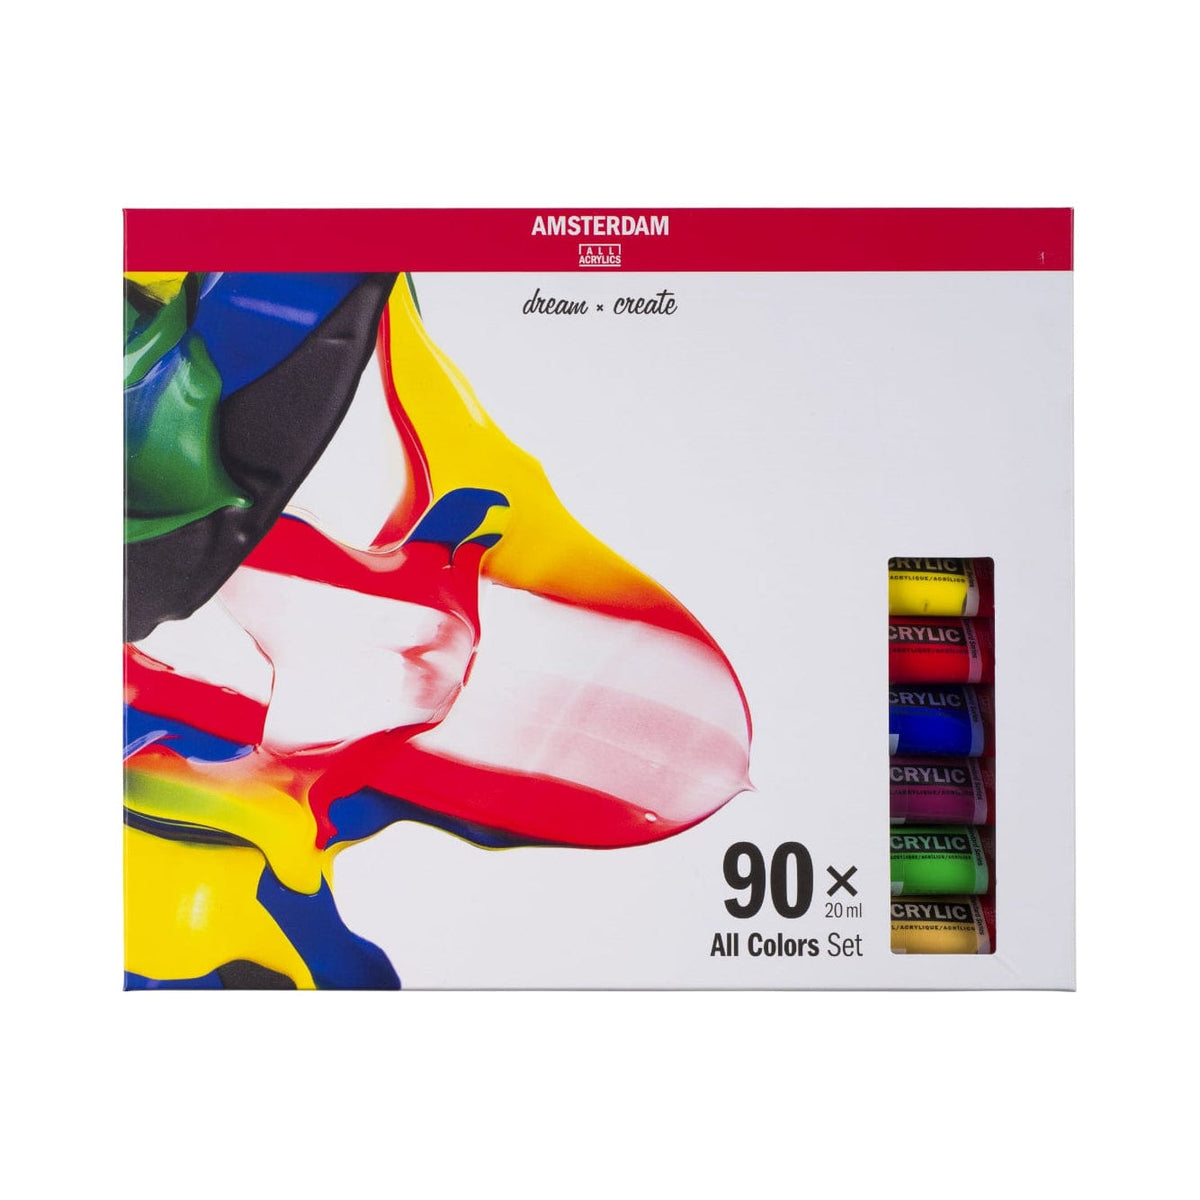 Standard Series Acrylic Paint All Colors Set | 90 x 20 ml